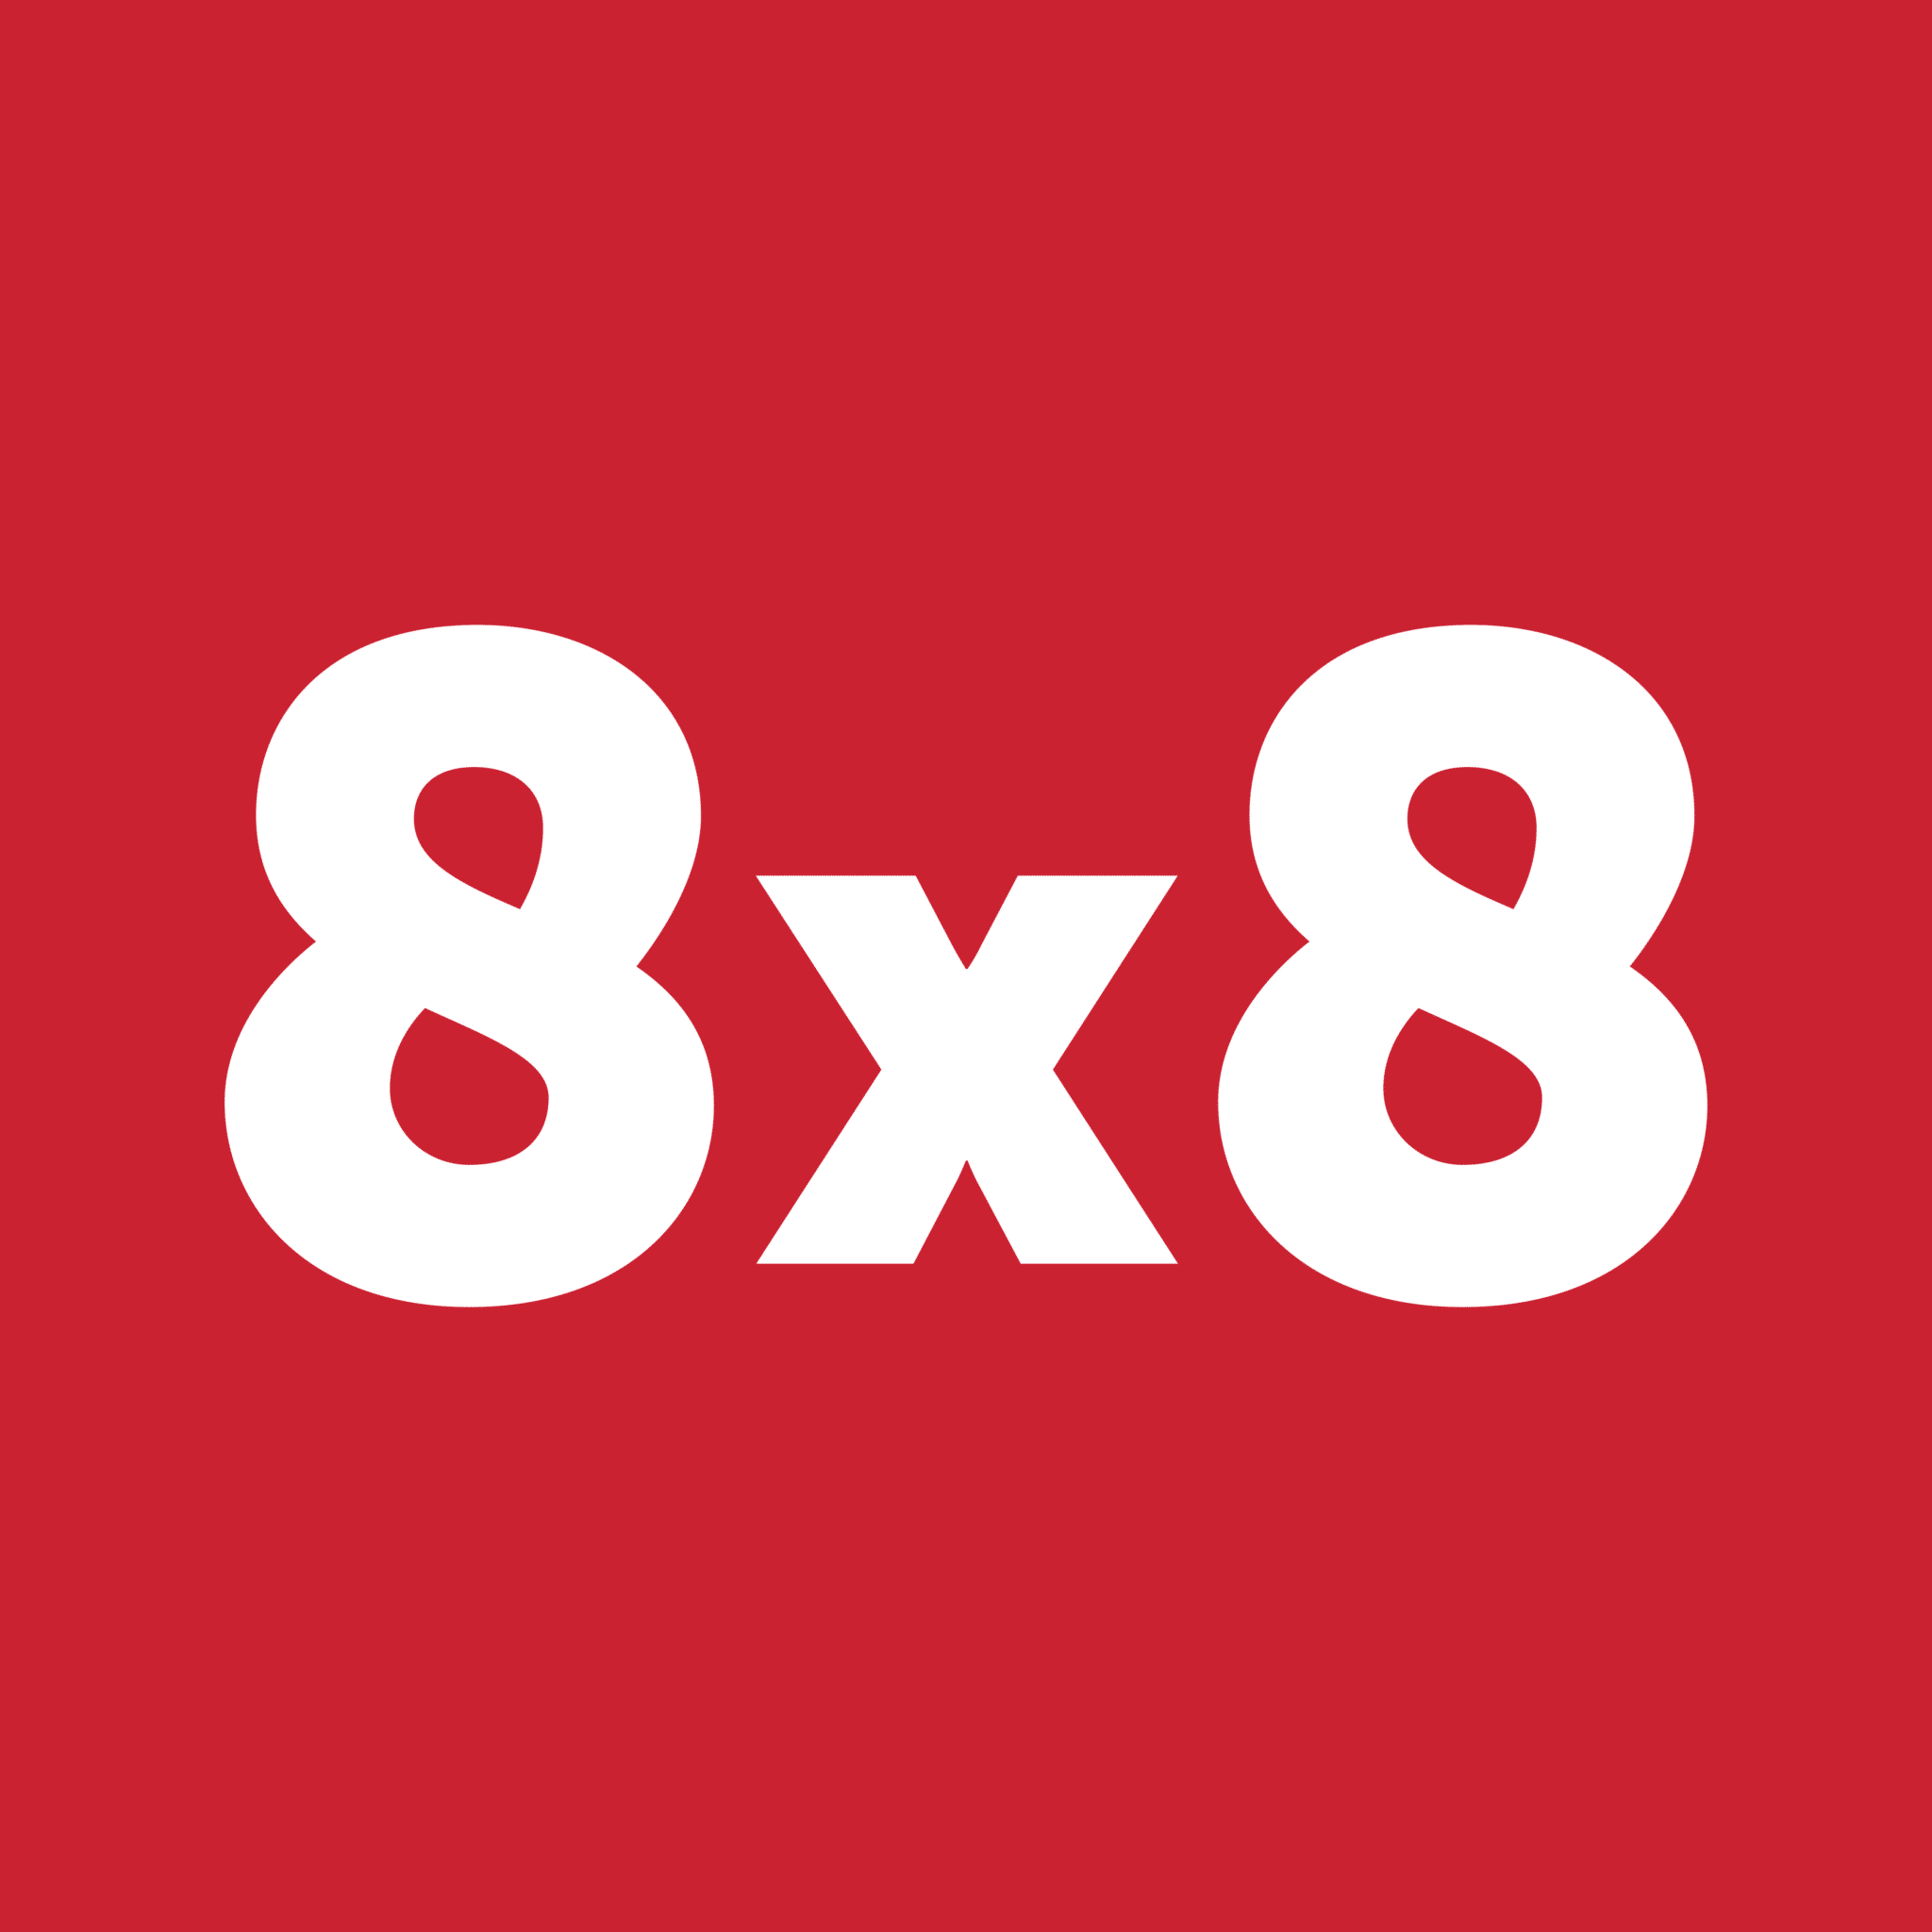 8x8 Integration